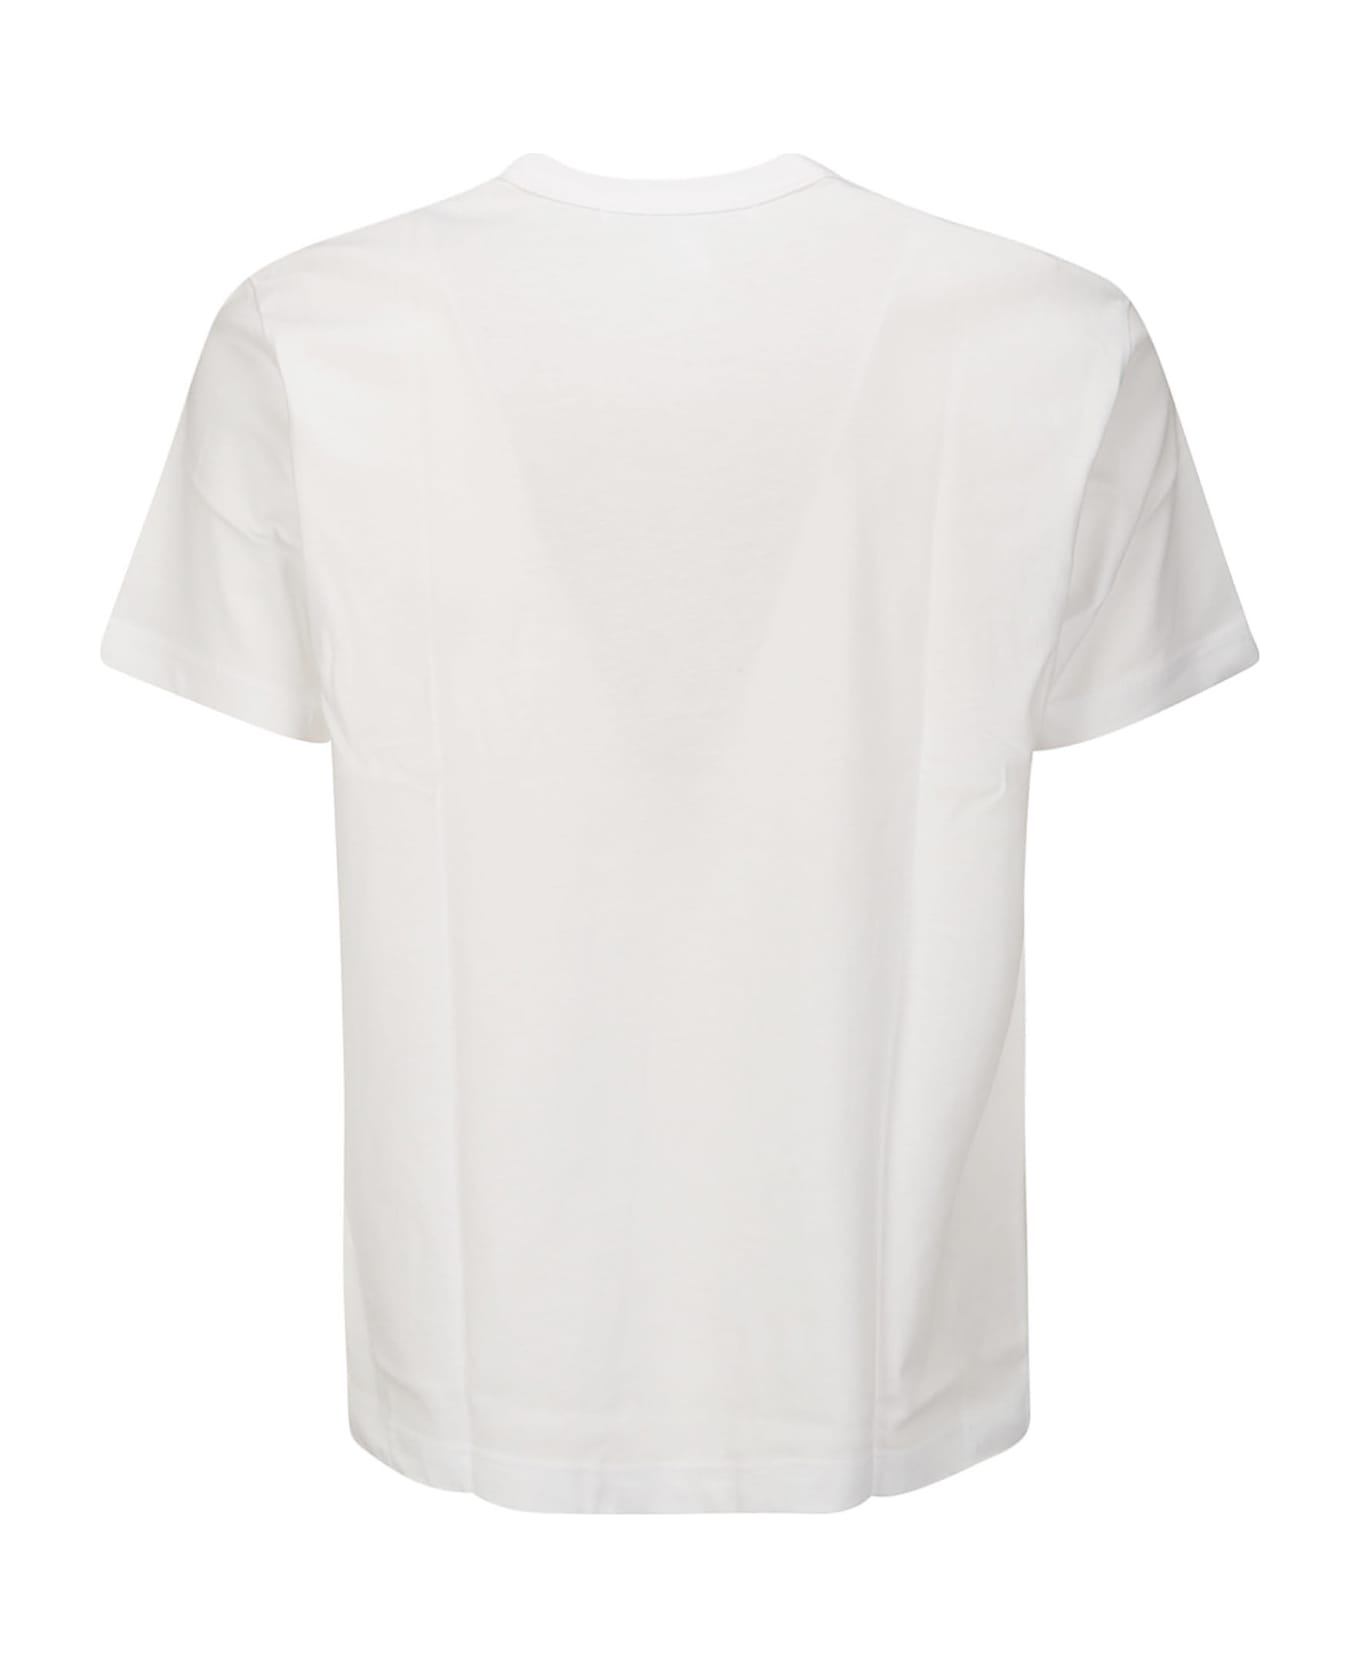 Comme des Garçons Shirt Cotton Jersey Plain J Andy Warhol - WHITE